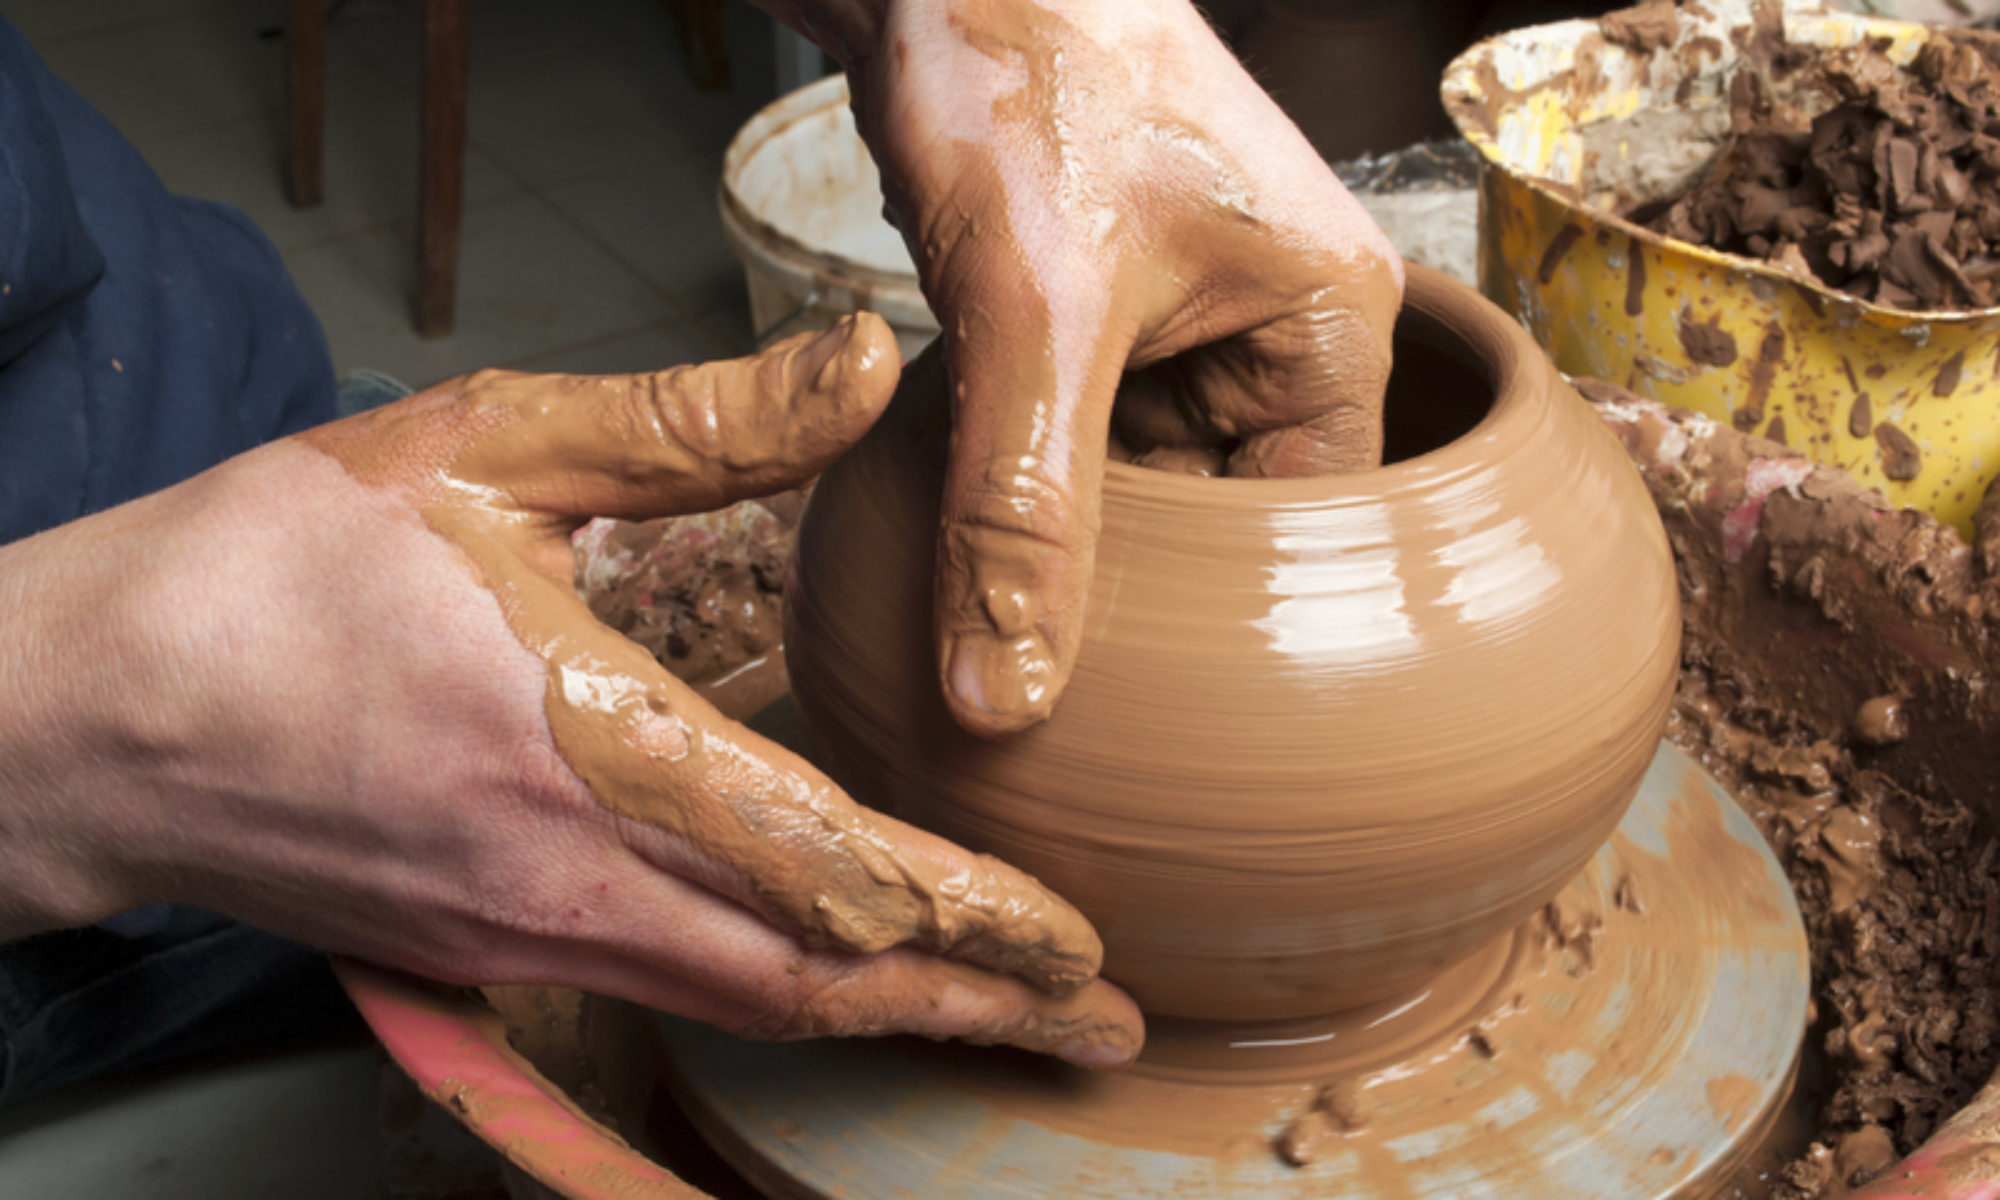 St George Potters Association – A community of potters